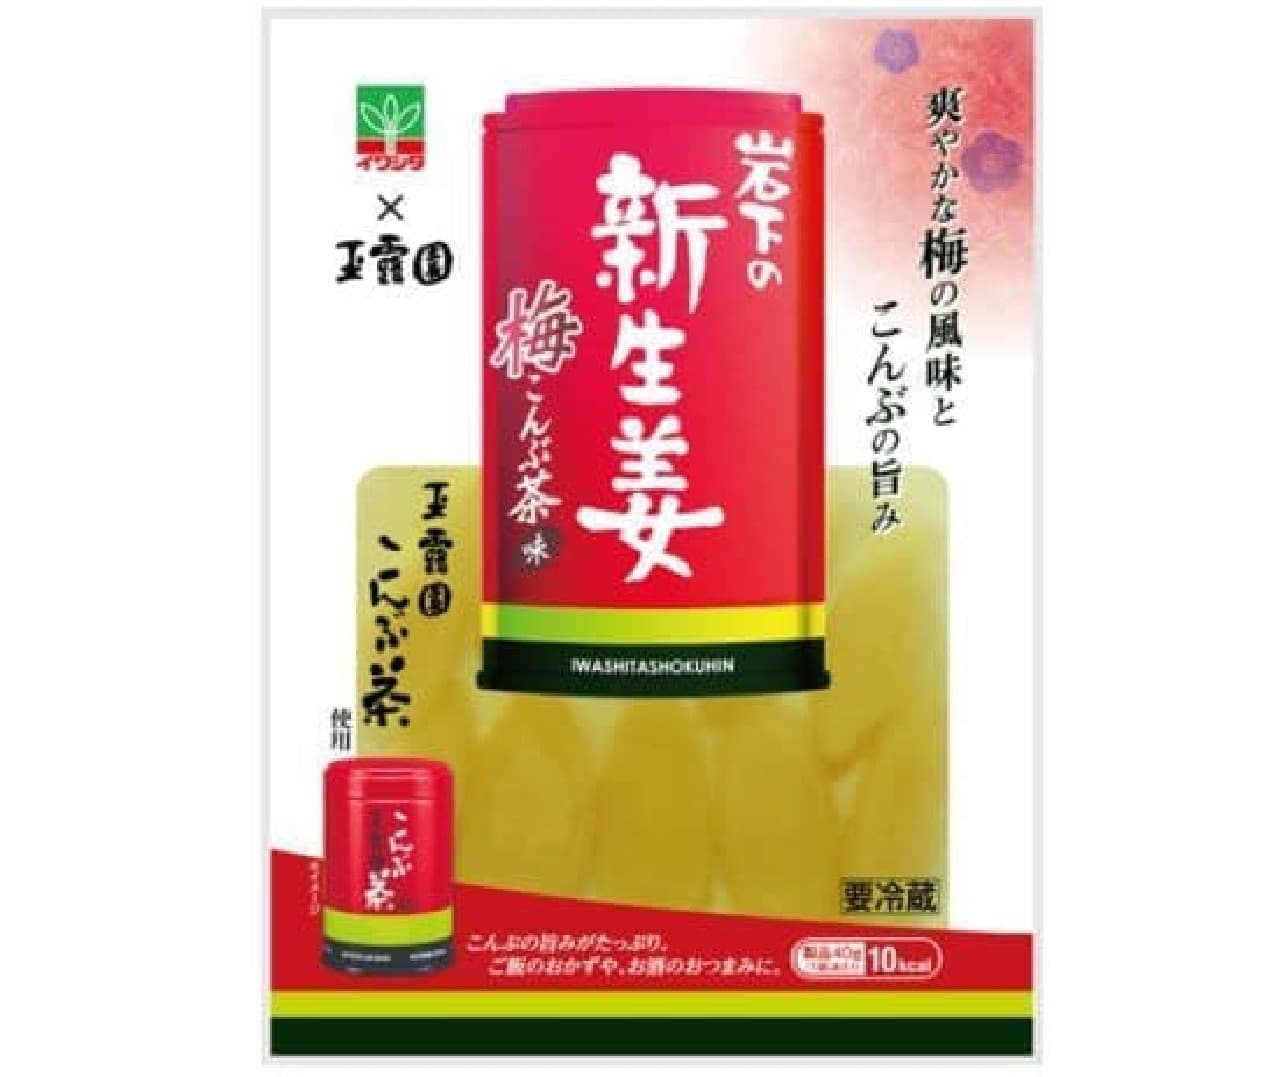 "Iwashita New Ginger Ume Konbu Tea Flavor" is a new ginger inspired by the taste of Ume Konbu Tea.